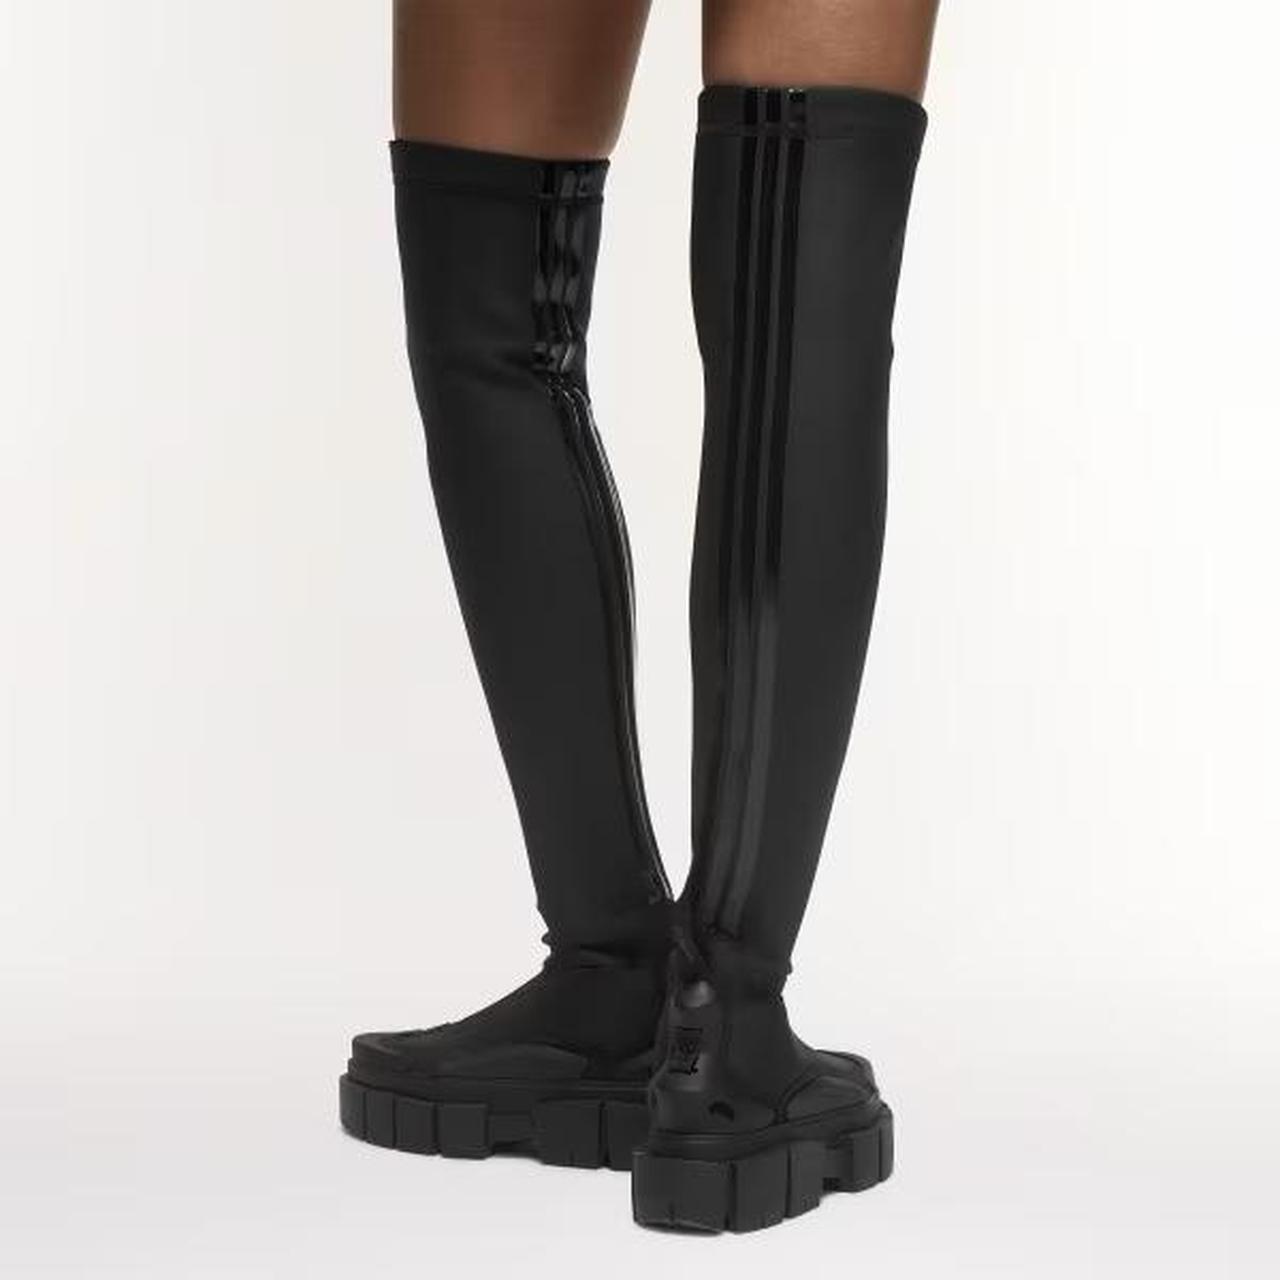 Adidas Ivy Park Noir by Beyoncé over knee boots size - Depop